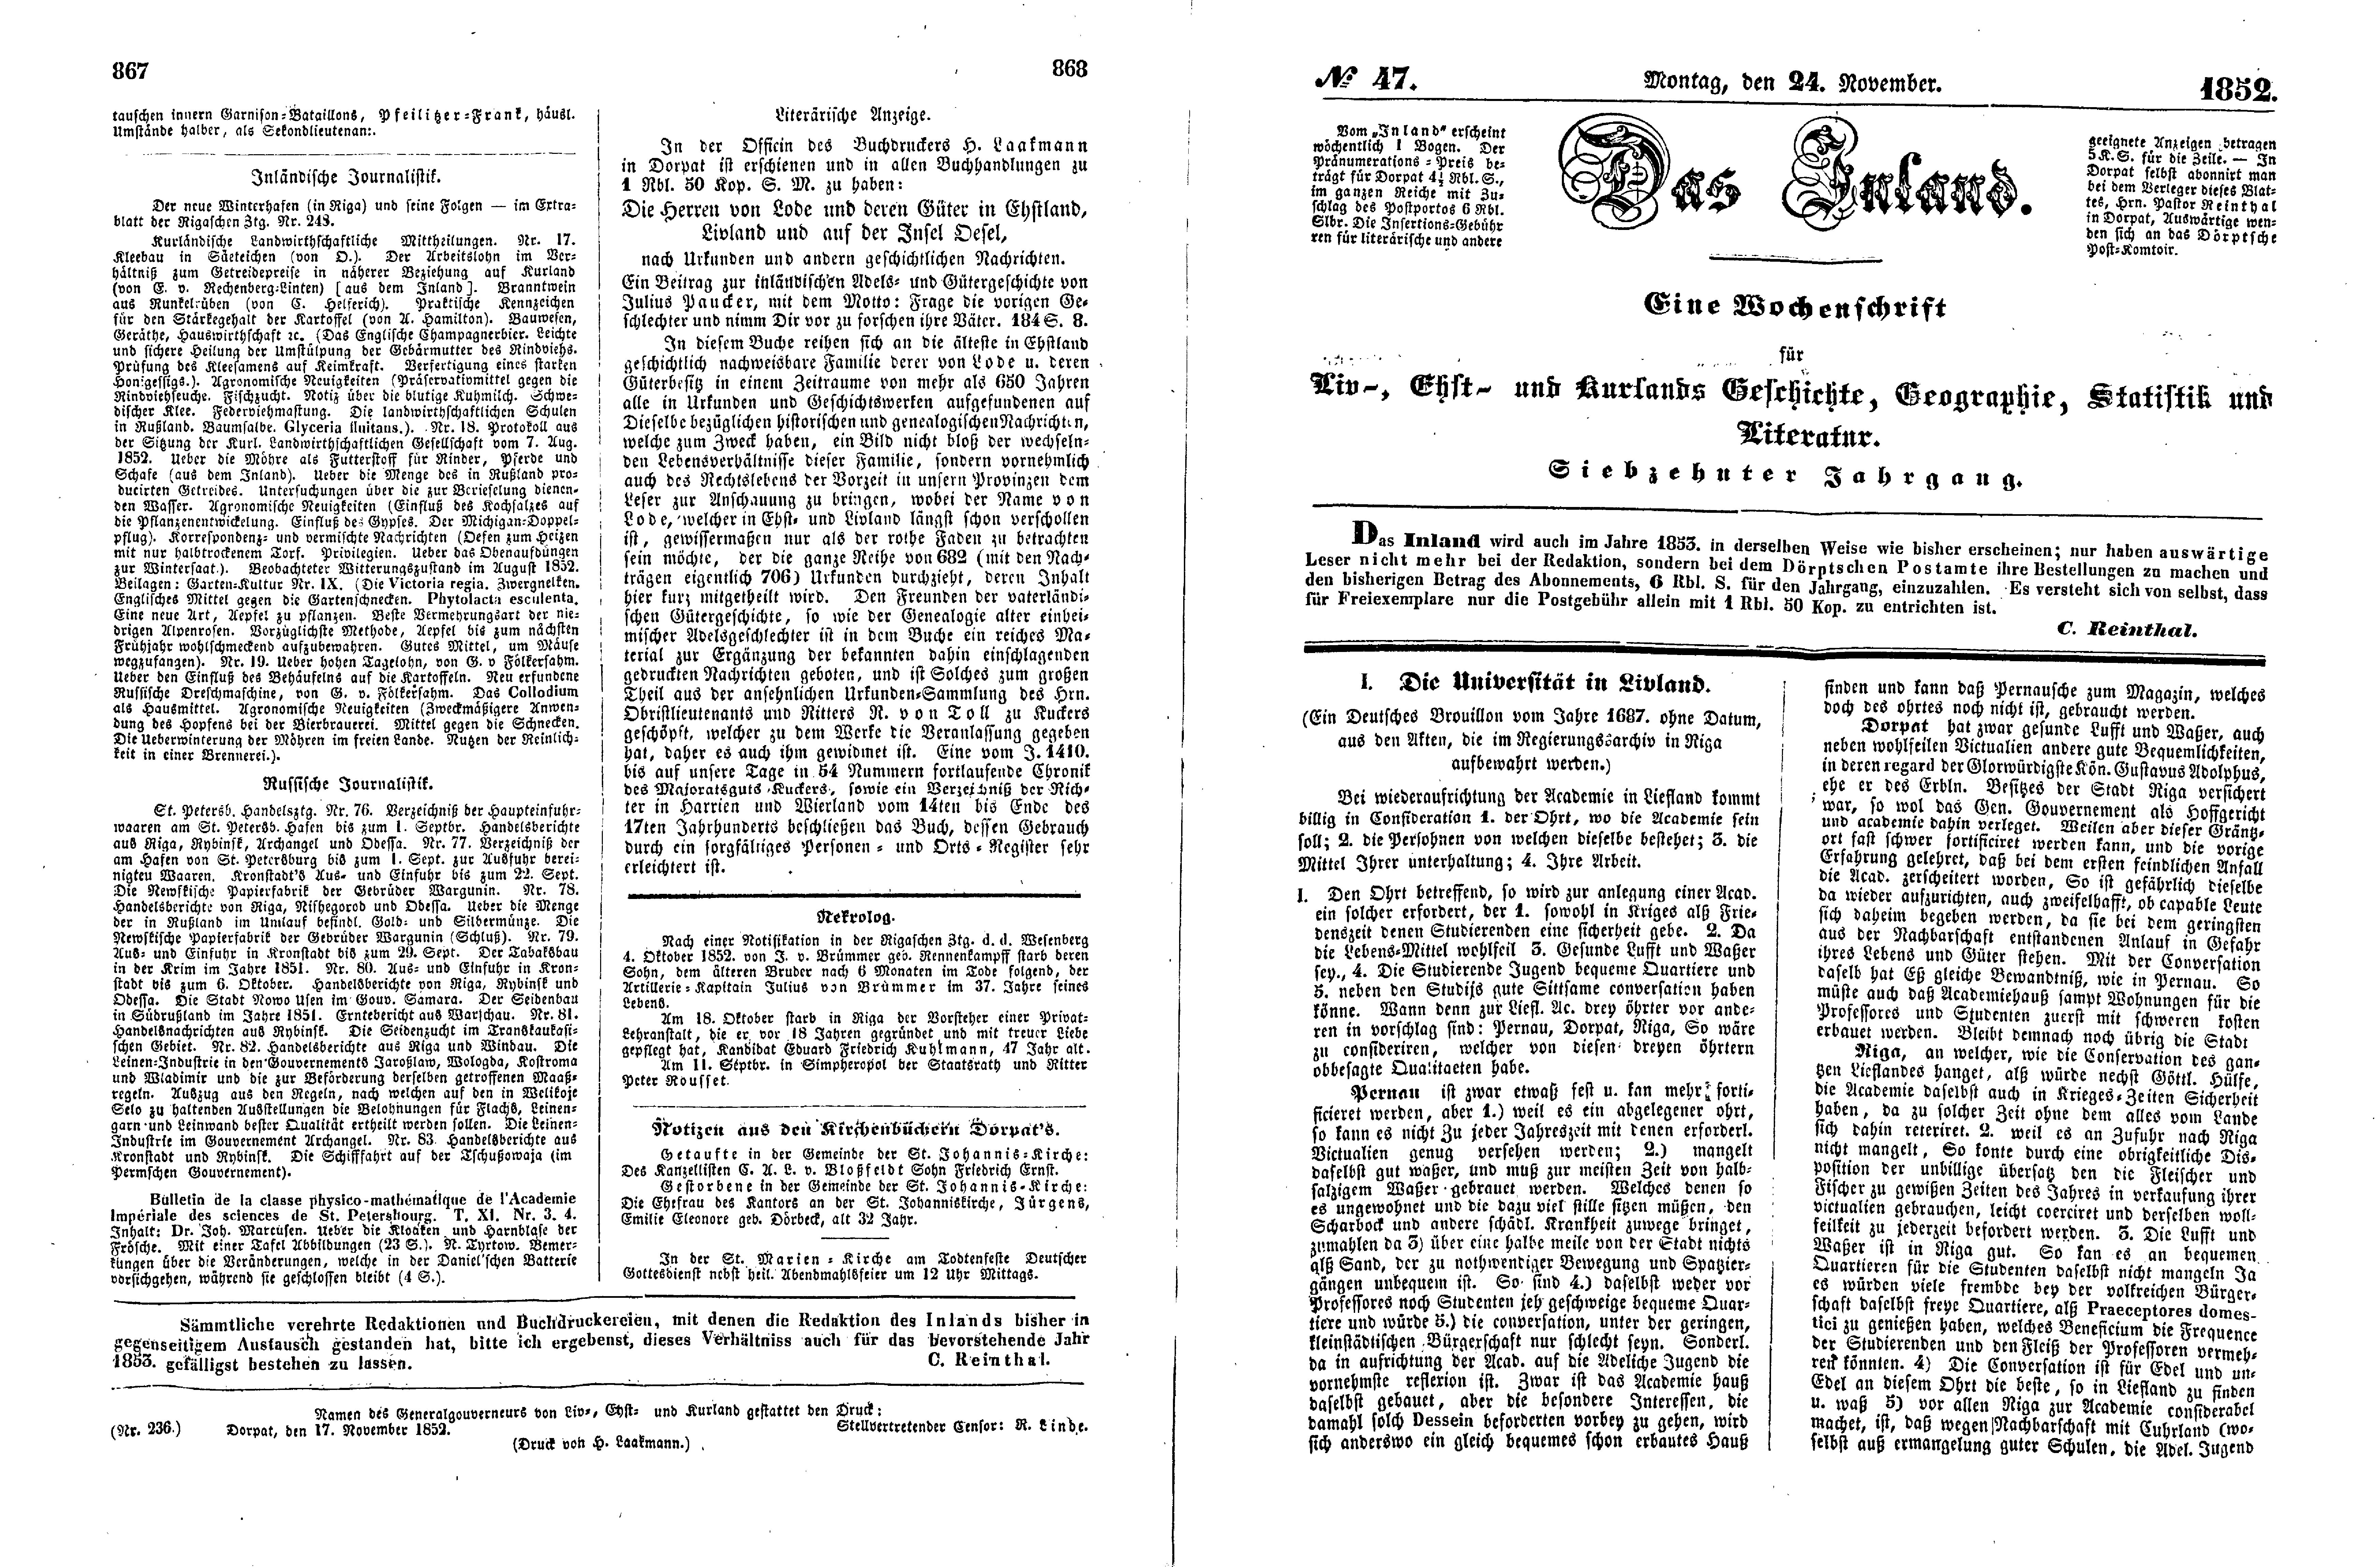 Das Inland [17] (1852) | 222. (867-870) Main body of text